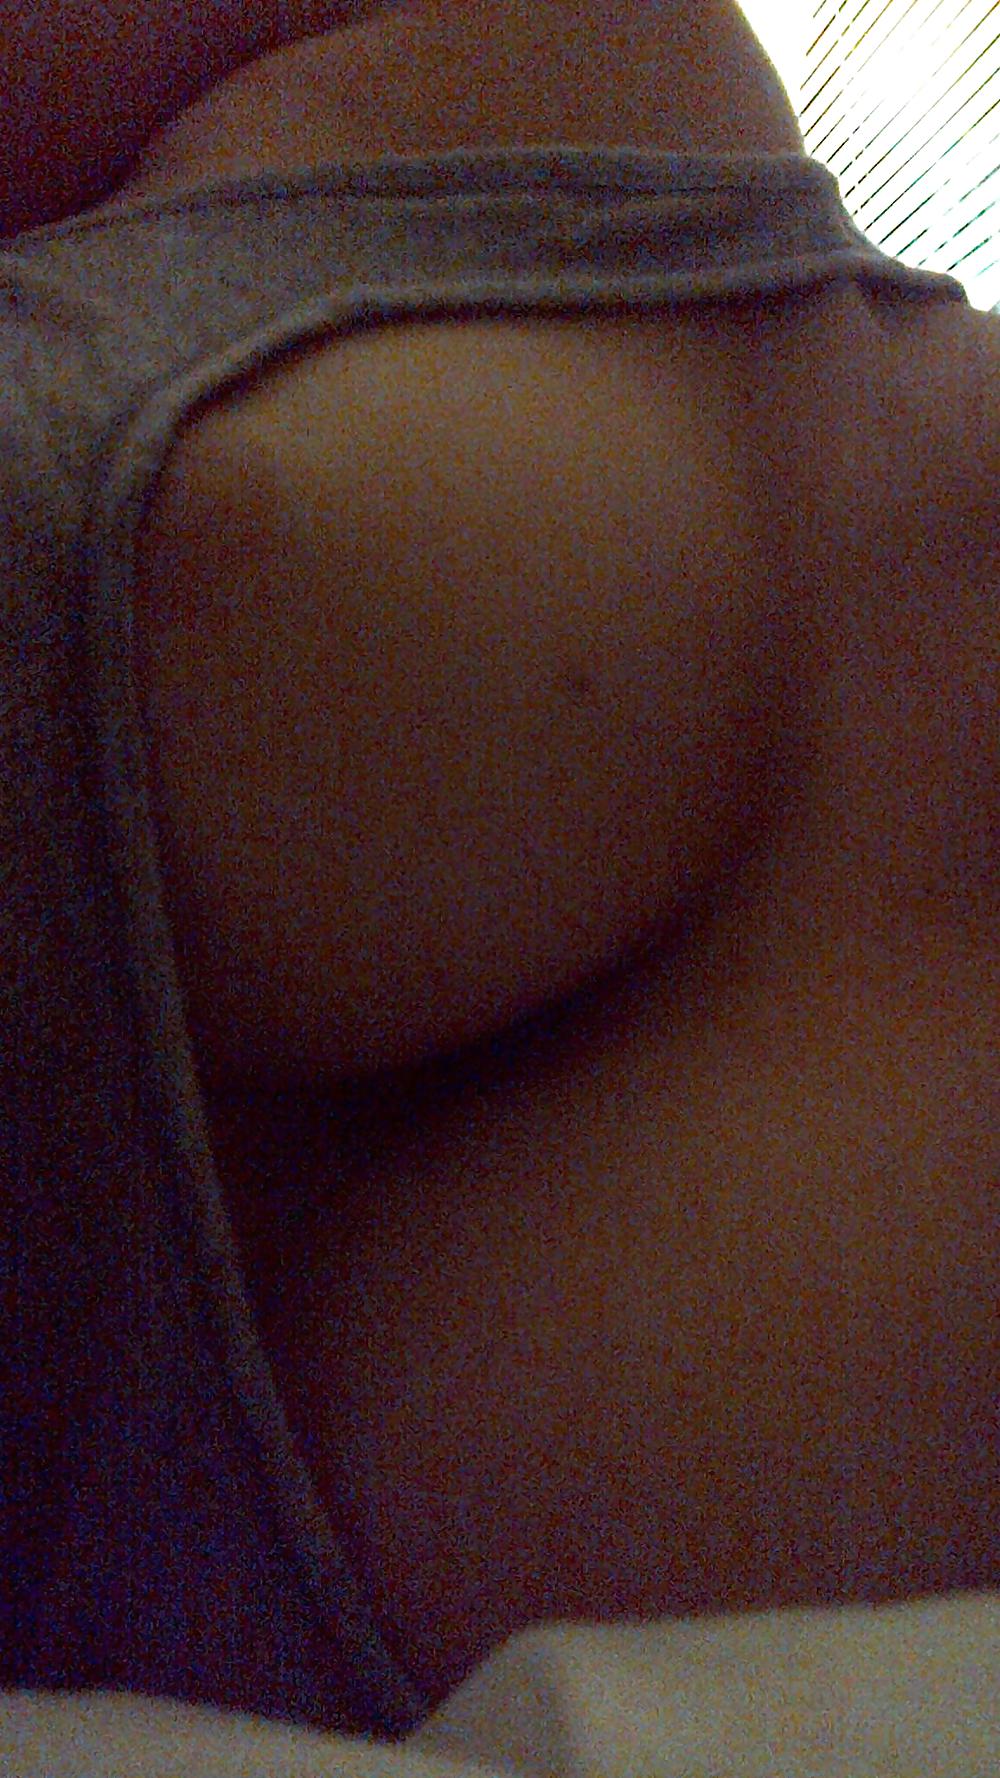 My Titties #9370040